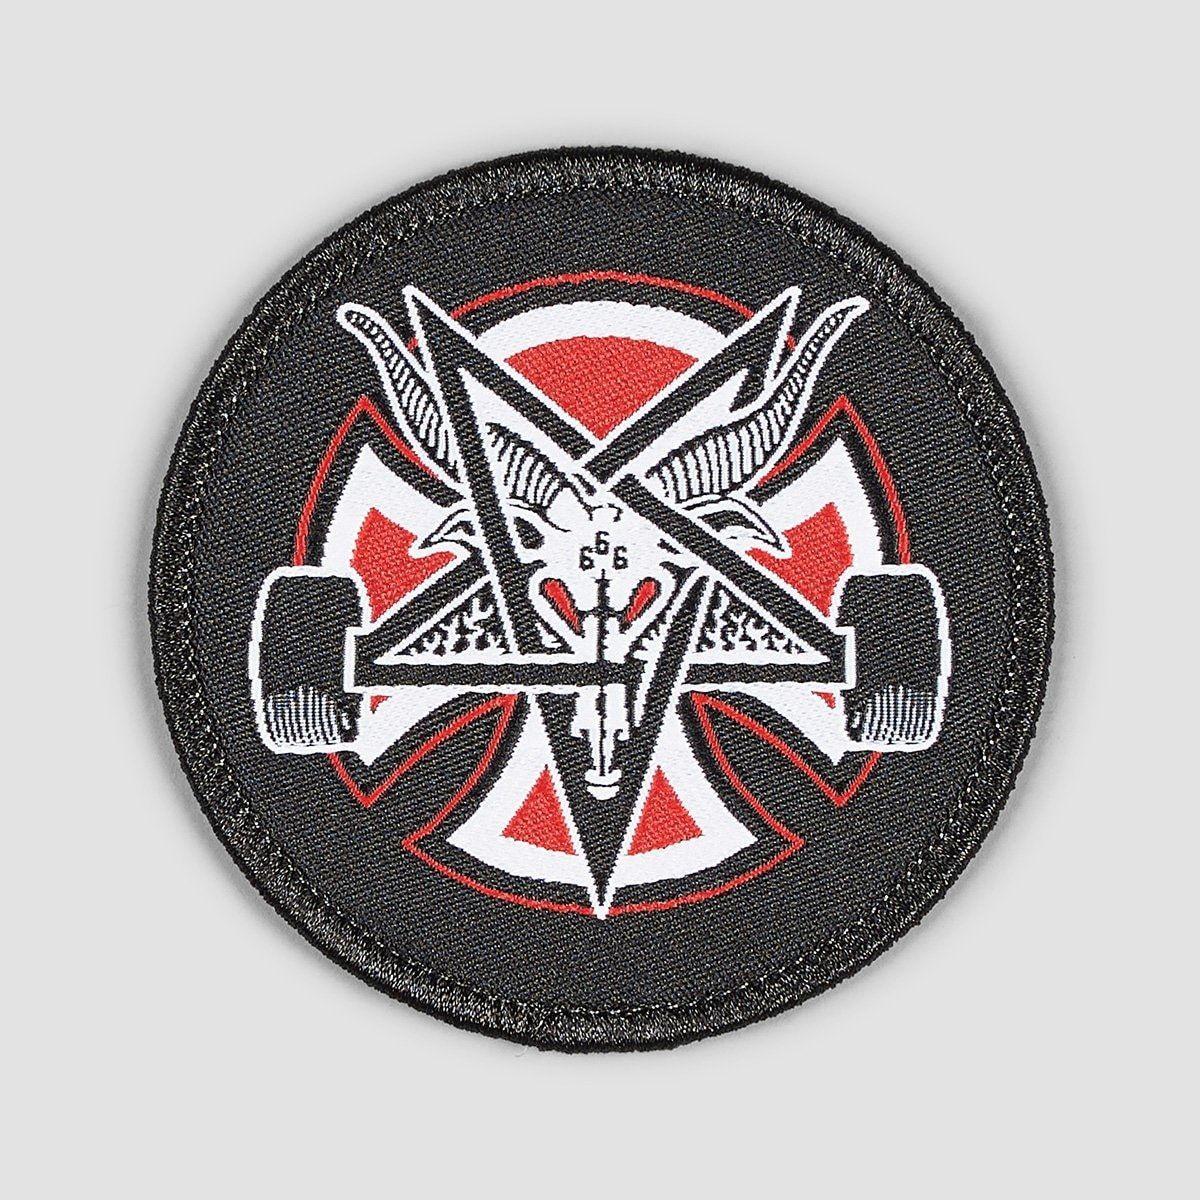 Thrasher Pentagram Logo - Independent X Thrasher Pentagram Cross patch Black.co